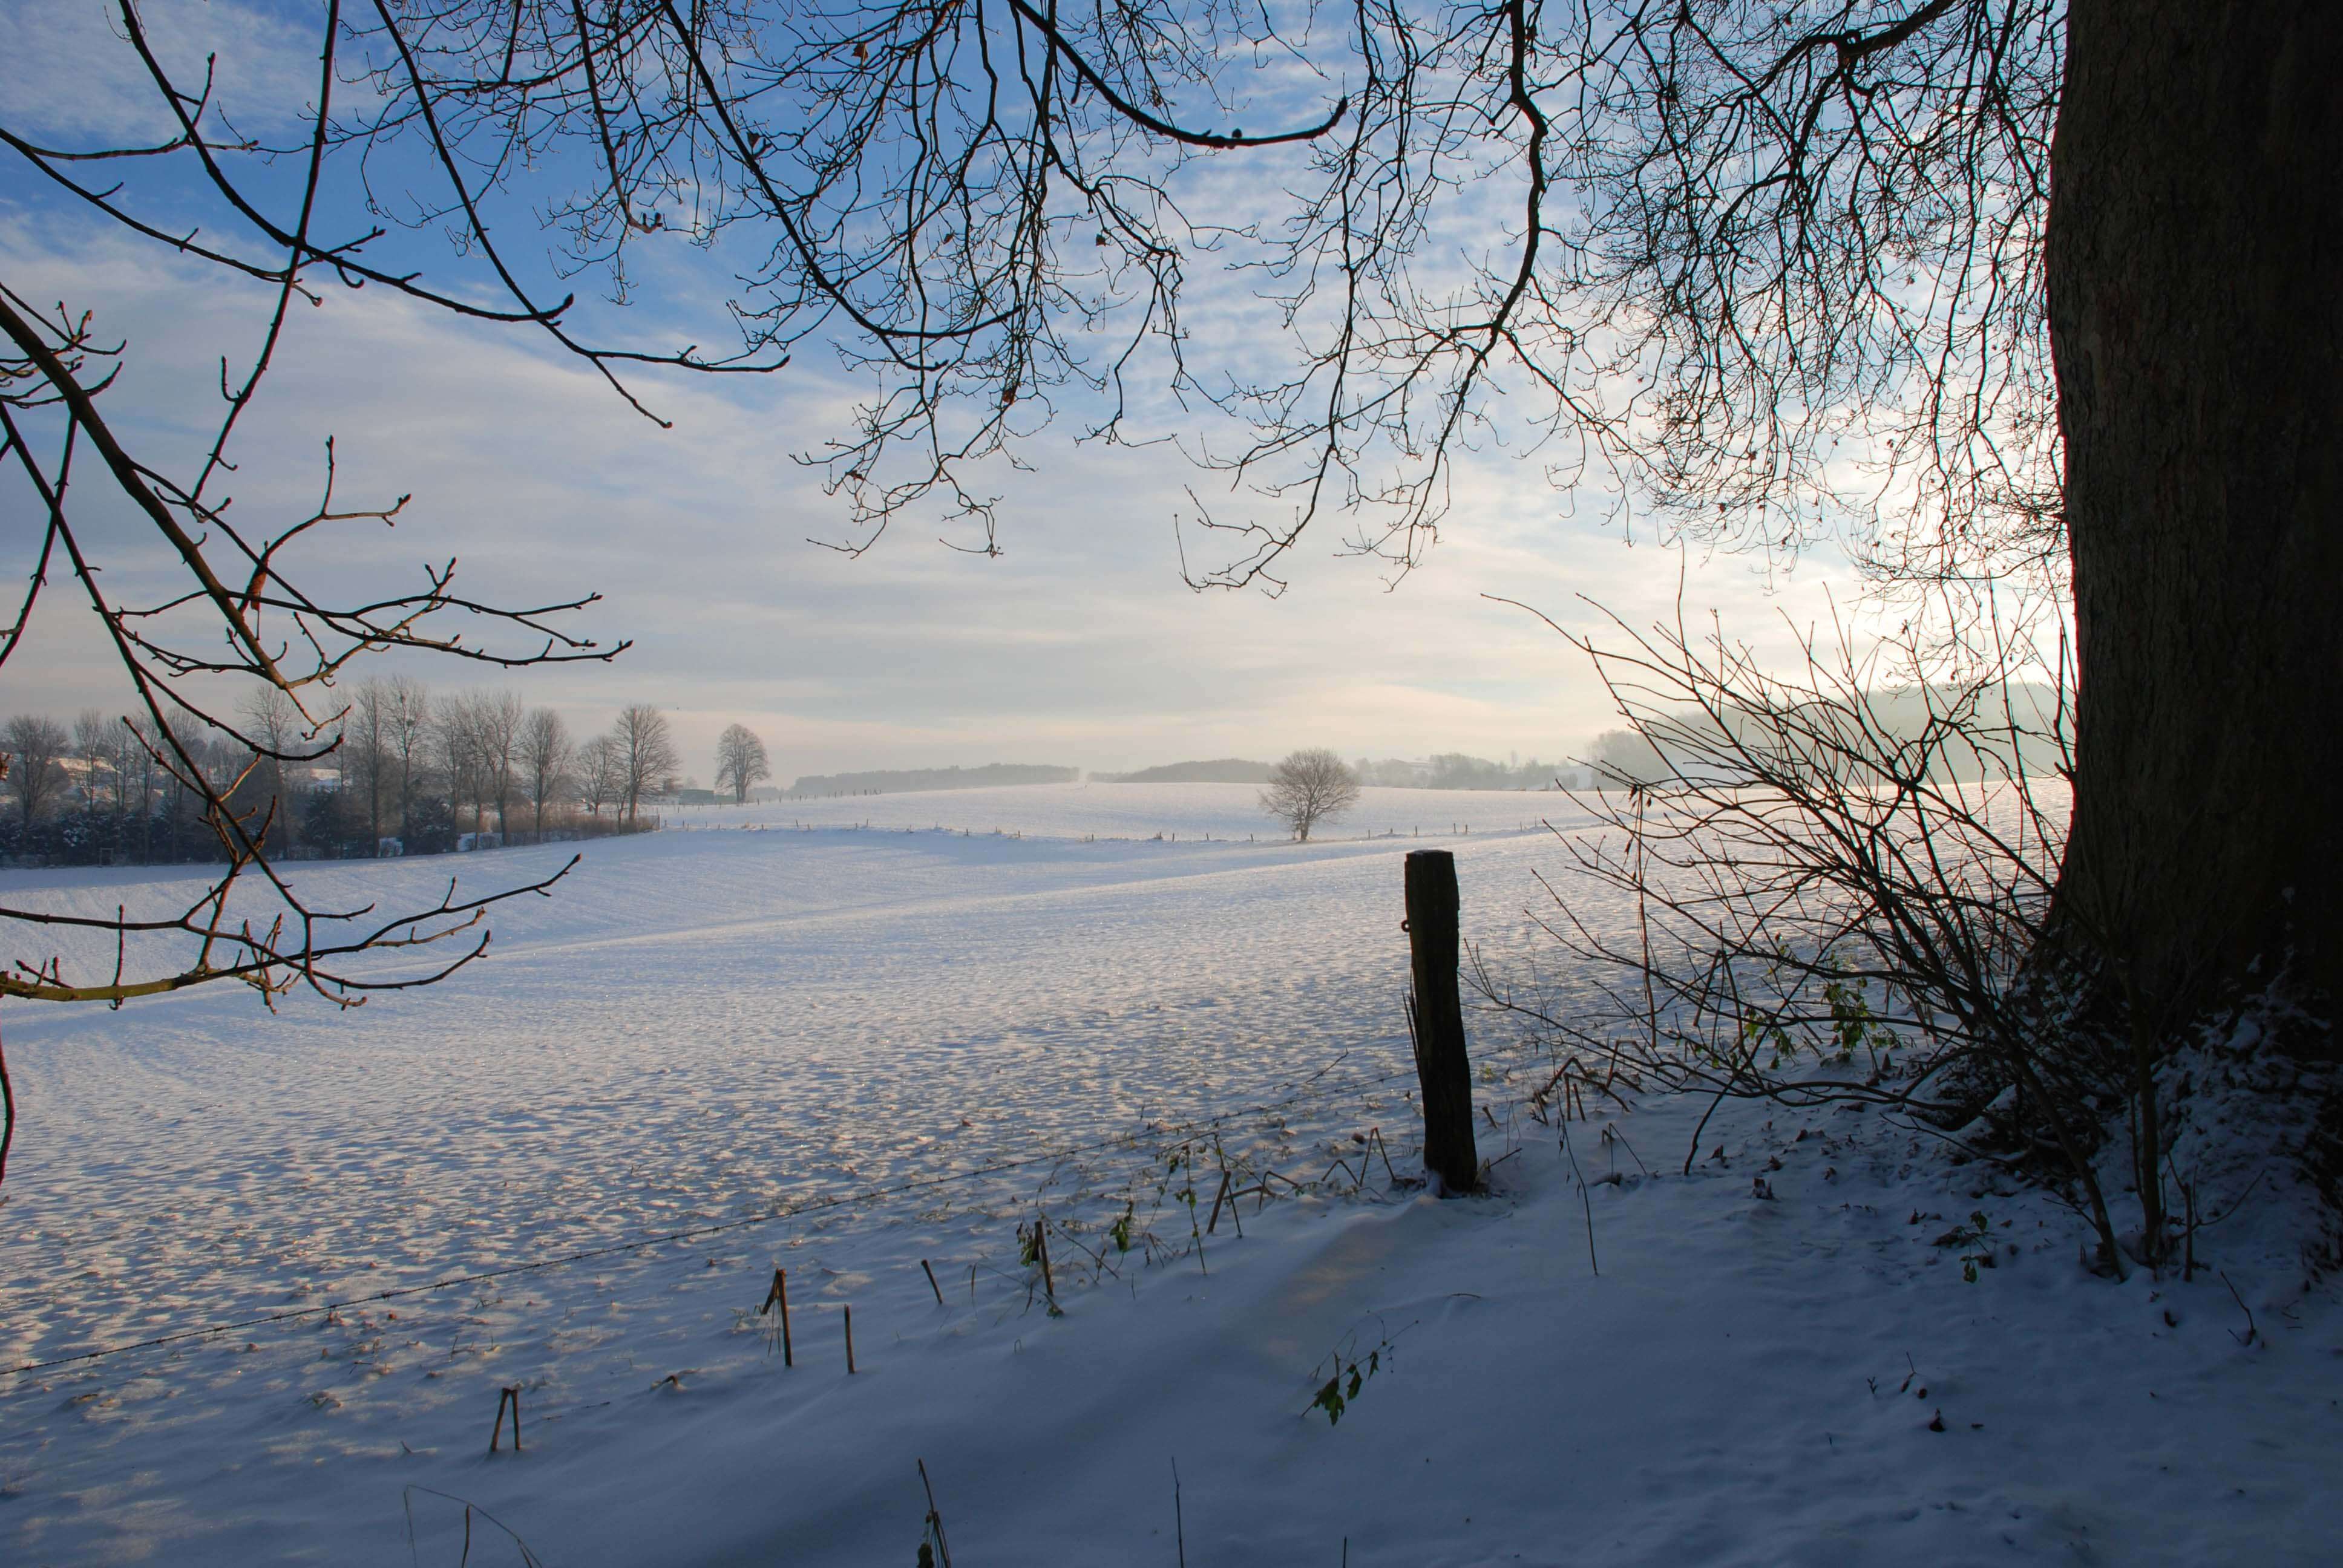 original Pixabay image of snow scene